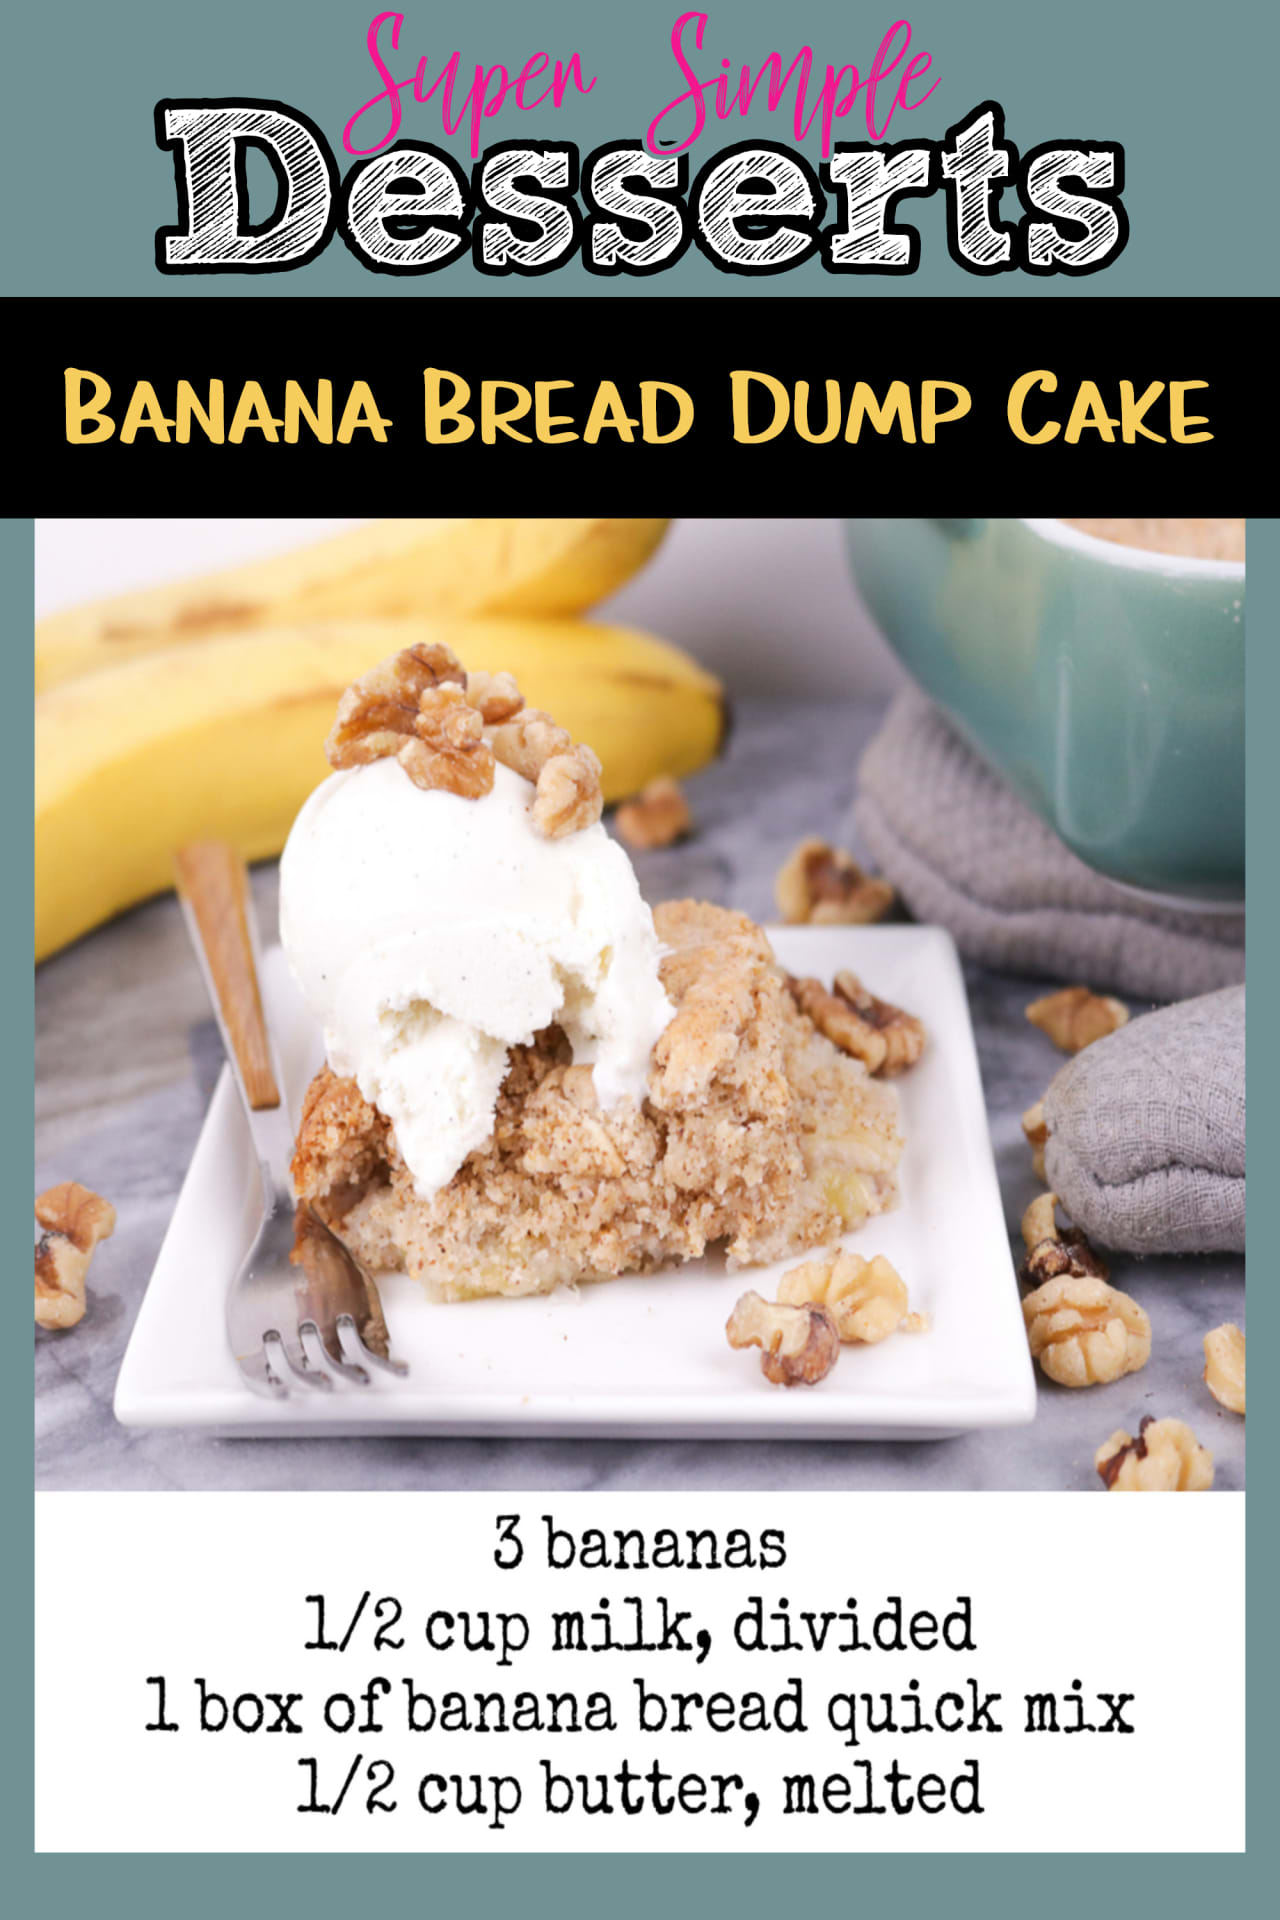 super simple dessert ideas for a crowd - easy banana bread dessert recipes - quick and easy banana bread dump cake recipe